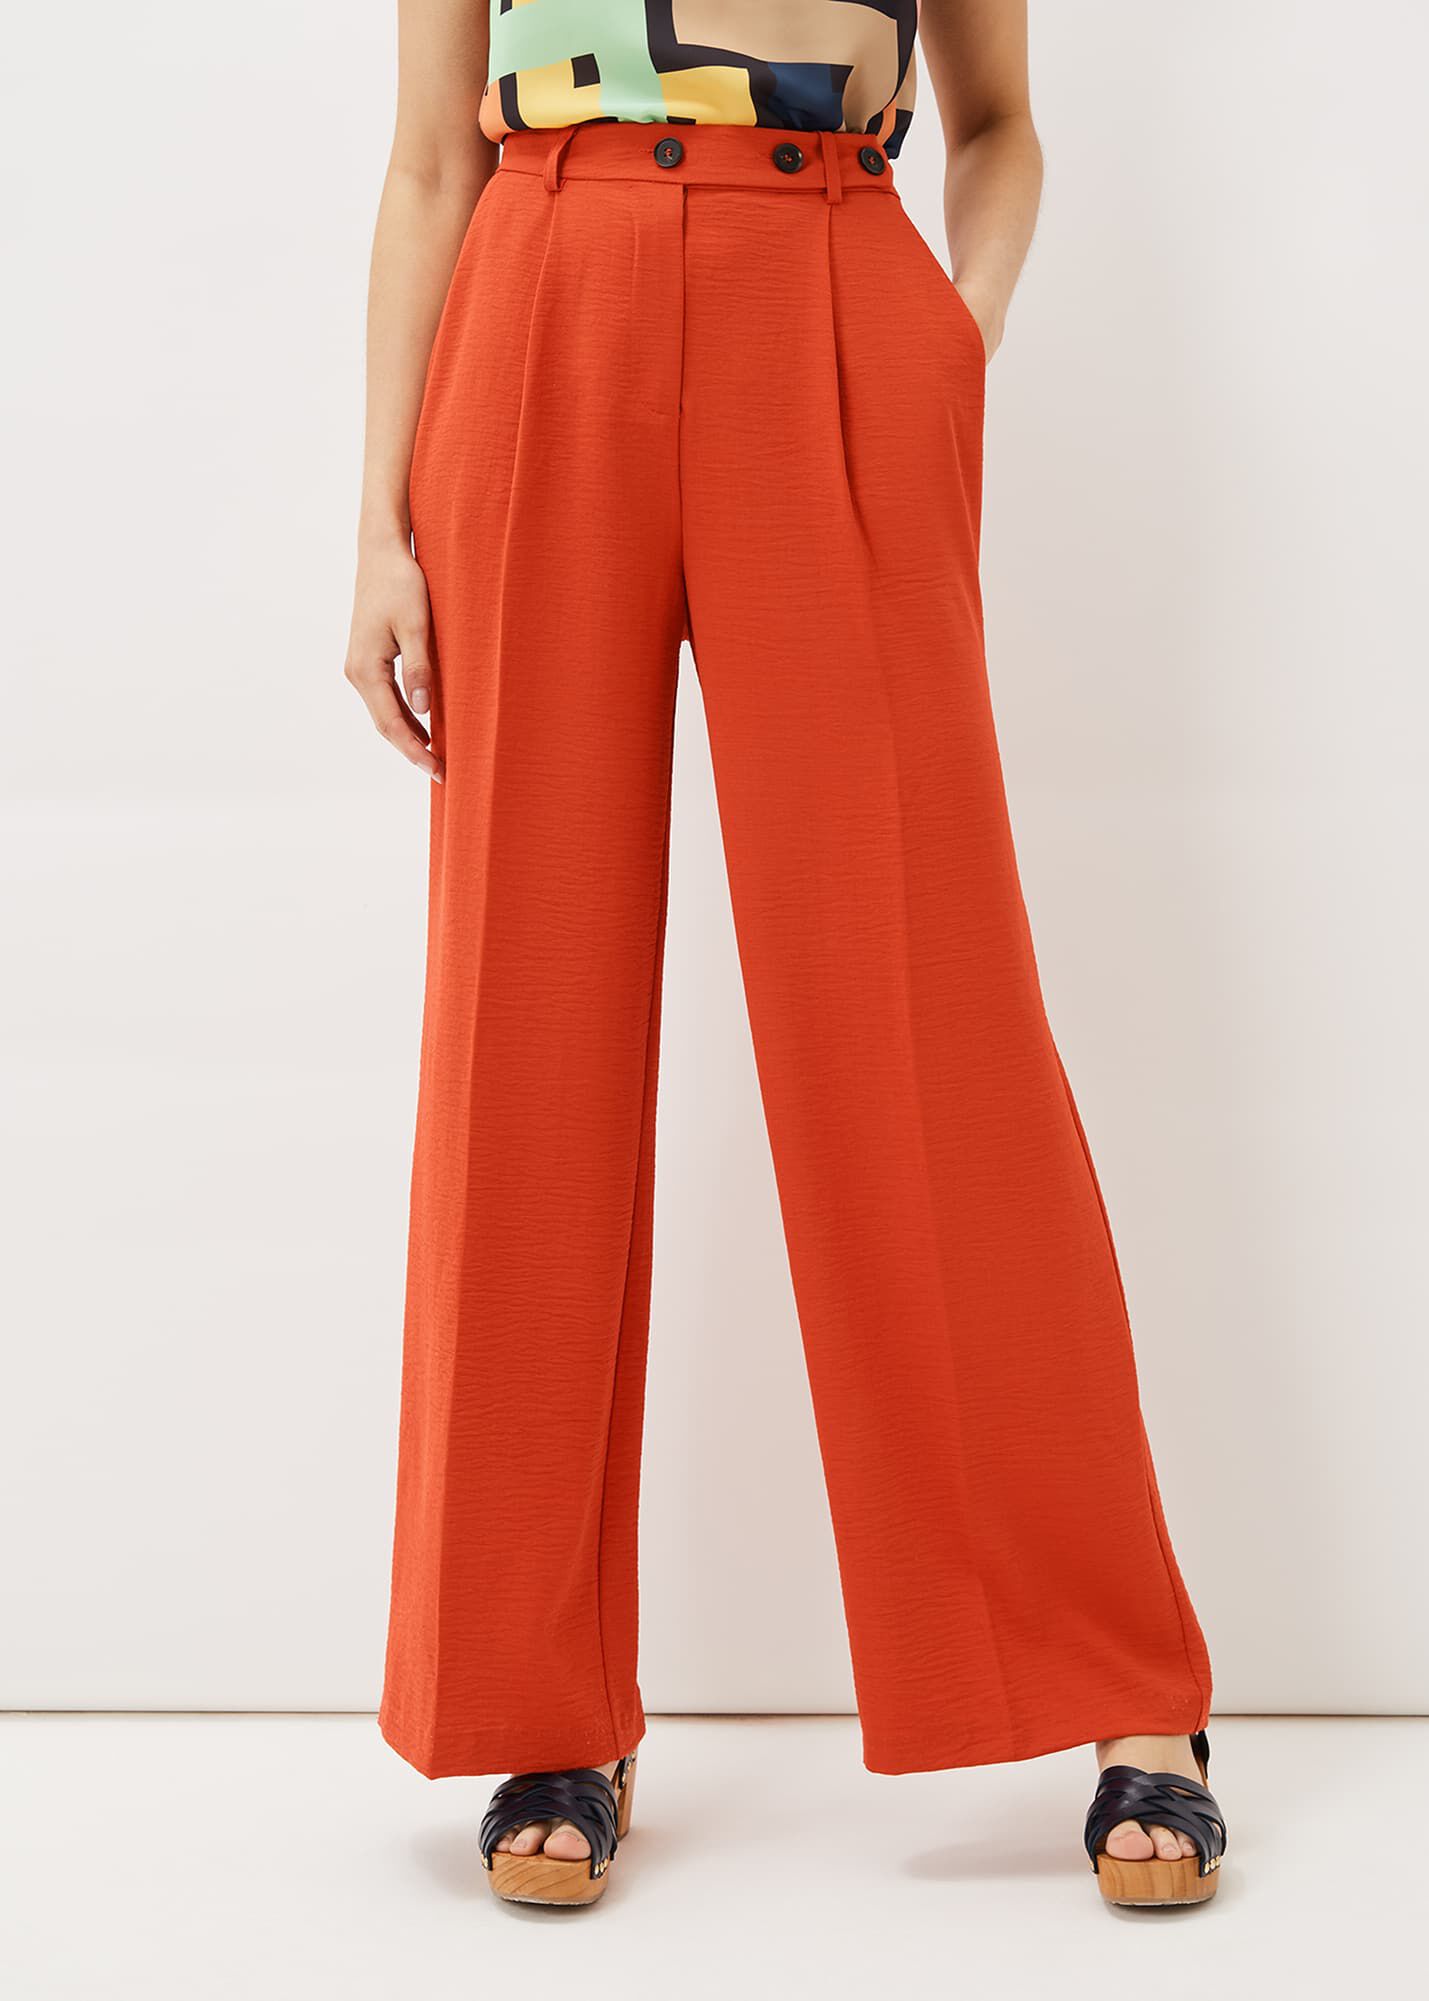 Buy Orange Floral Print Cropped Wide Leg Trousers - 10L | Trousers | Tu